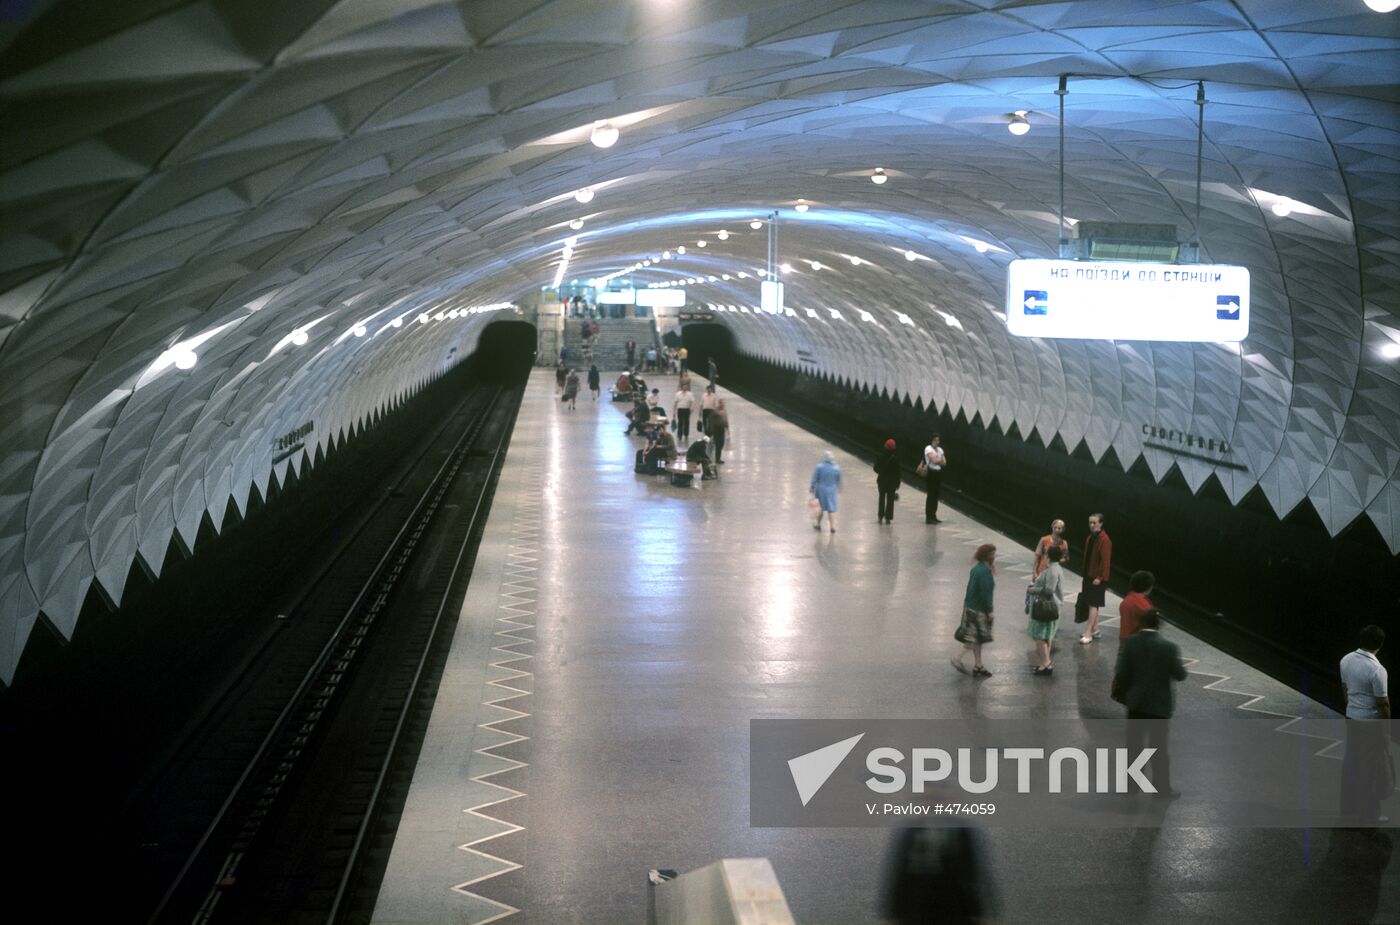 Kharkov subway